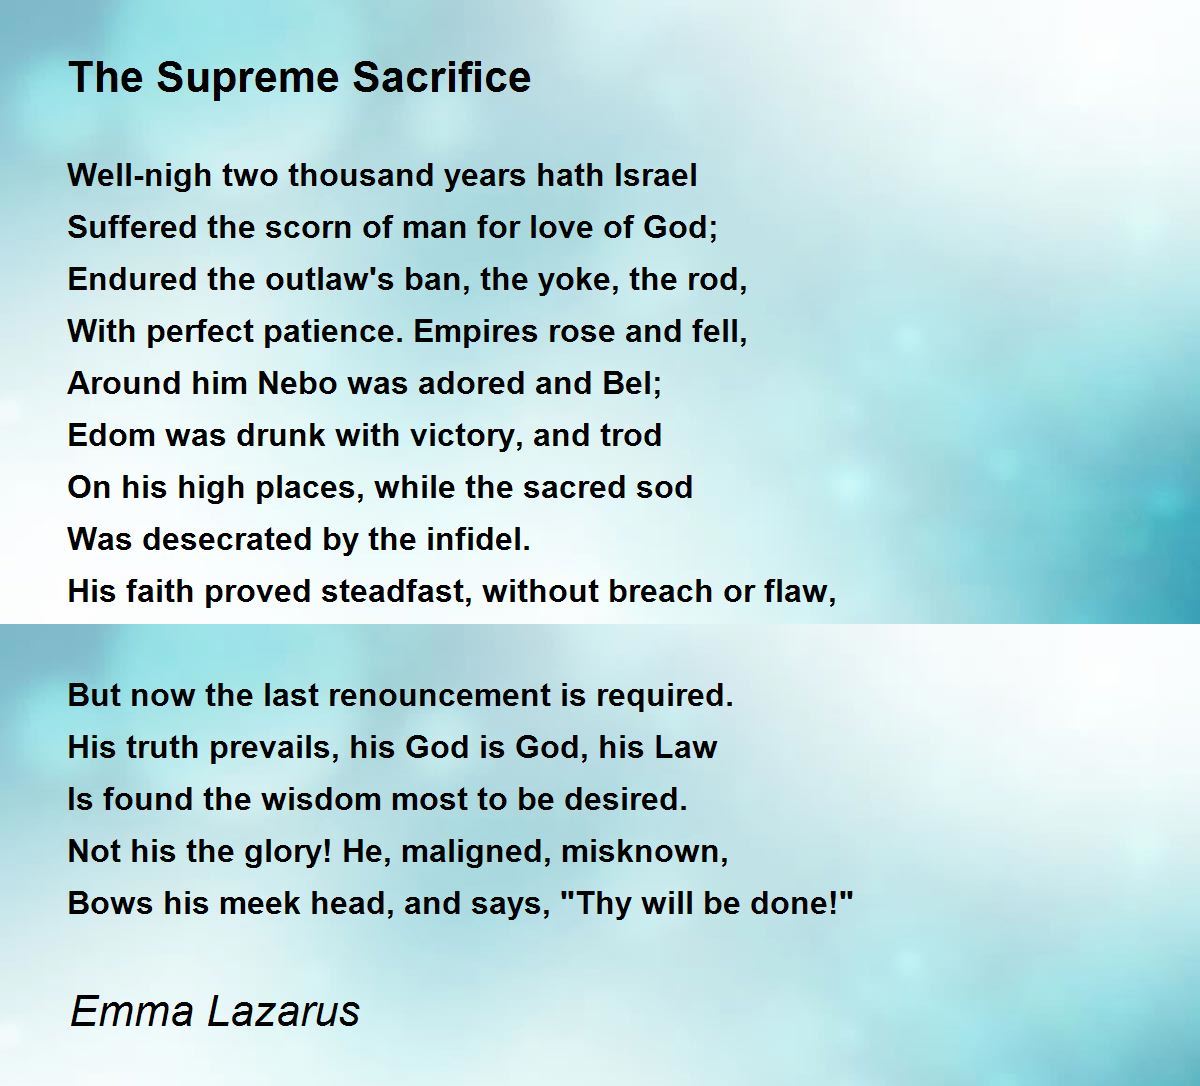 emma lazarus poem meaning